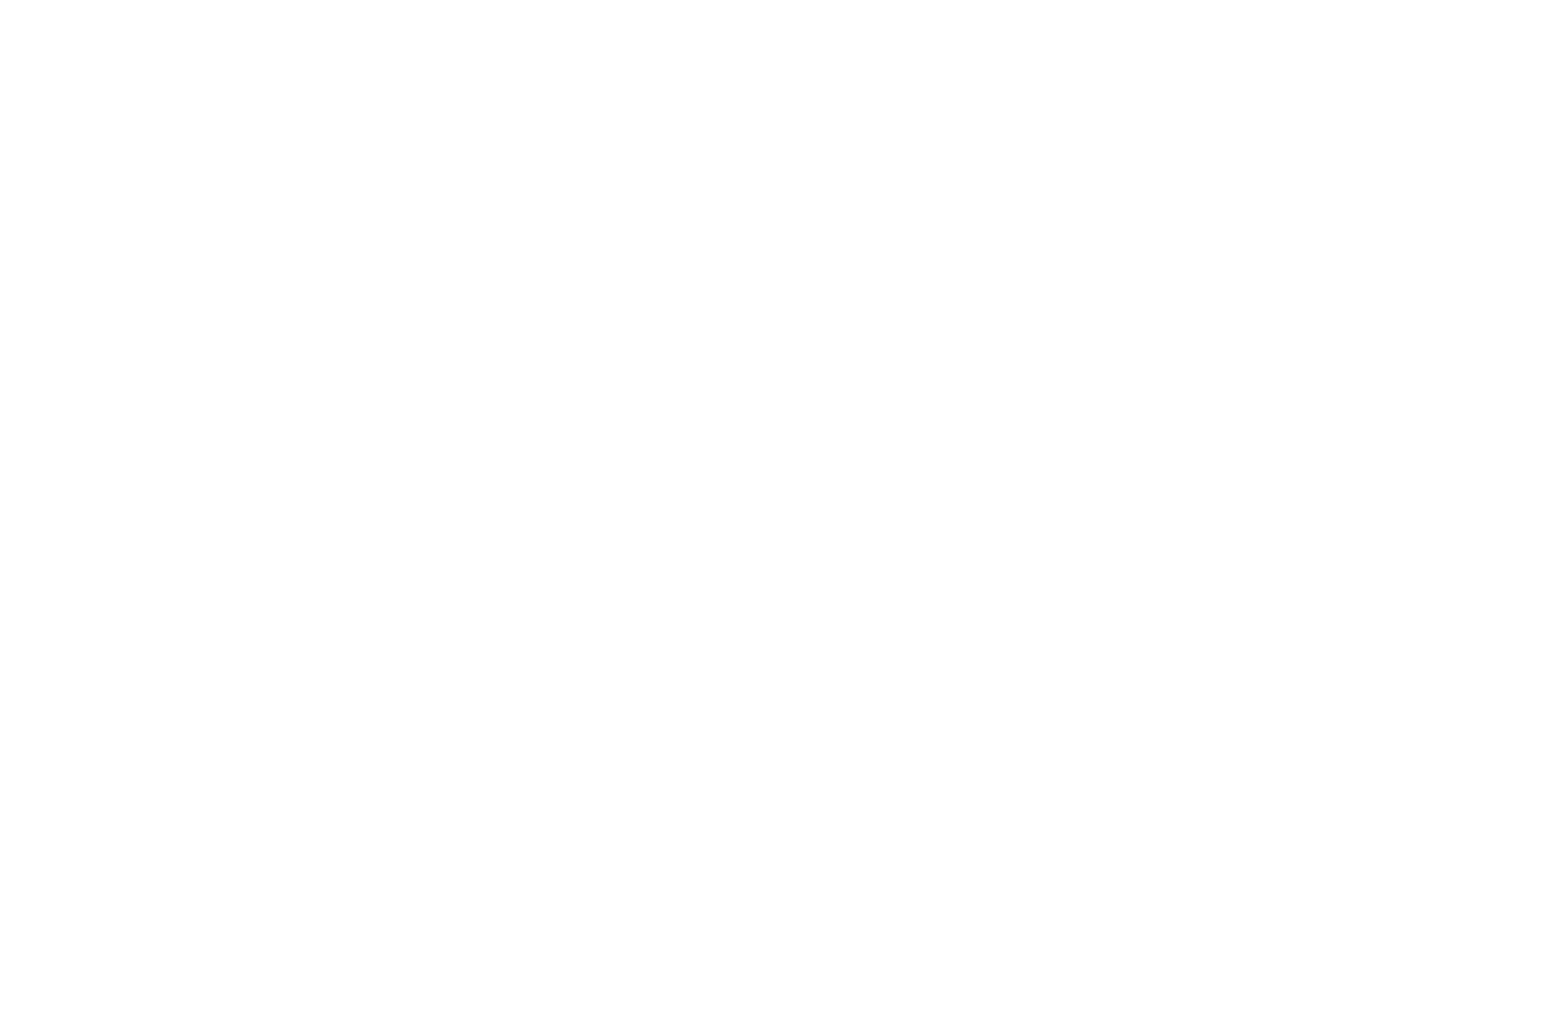 Seres Group  logo for dark backgrounds (transparent PNG)